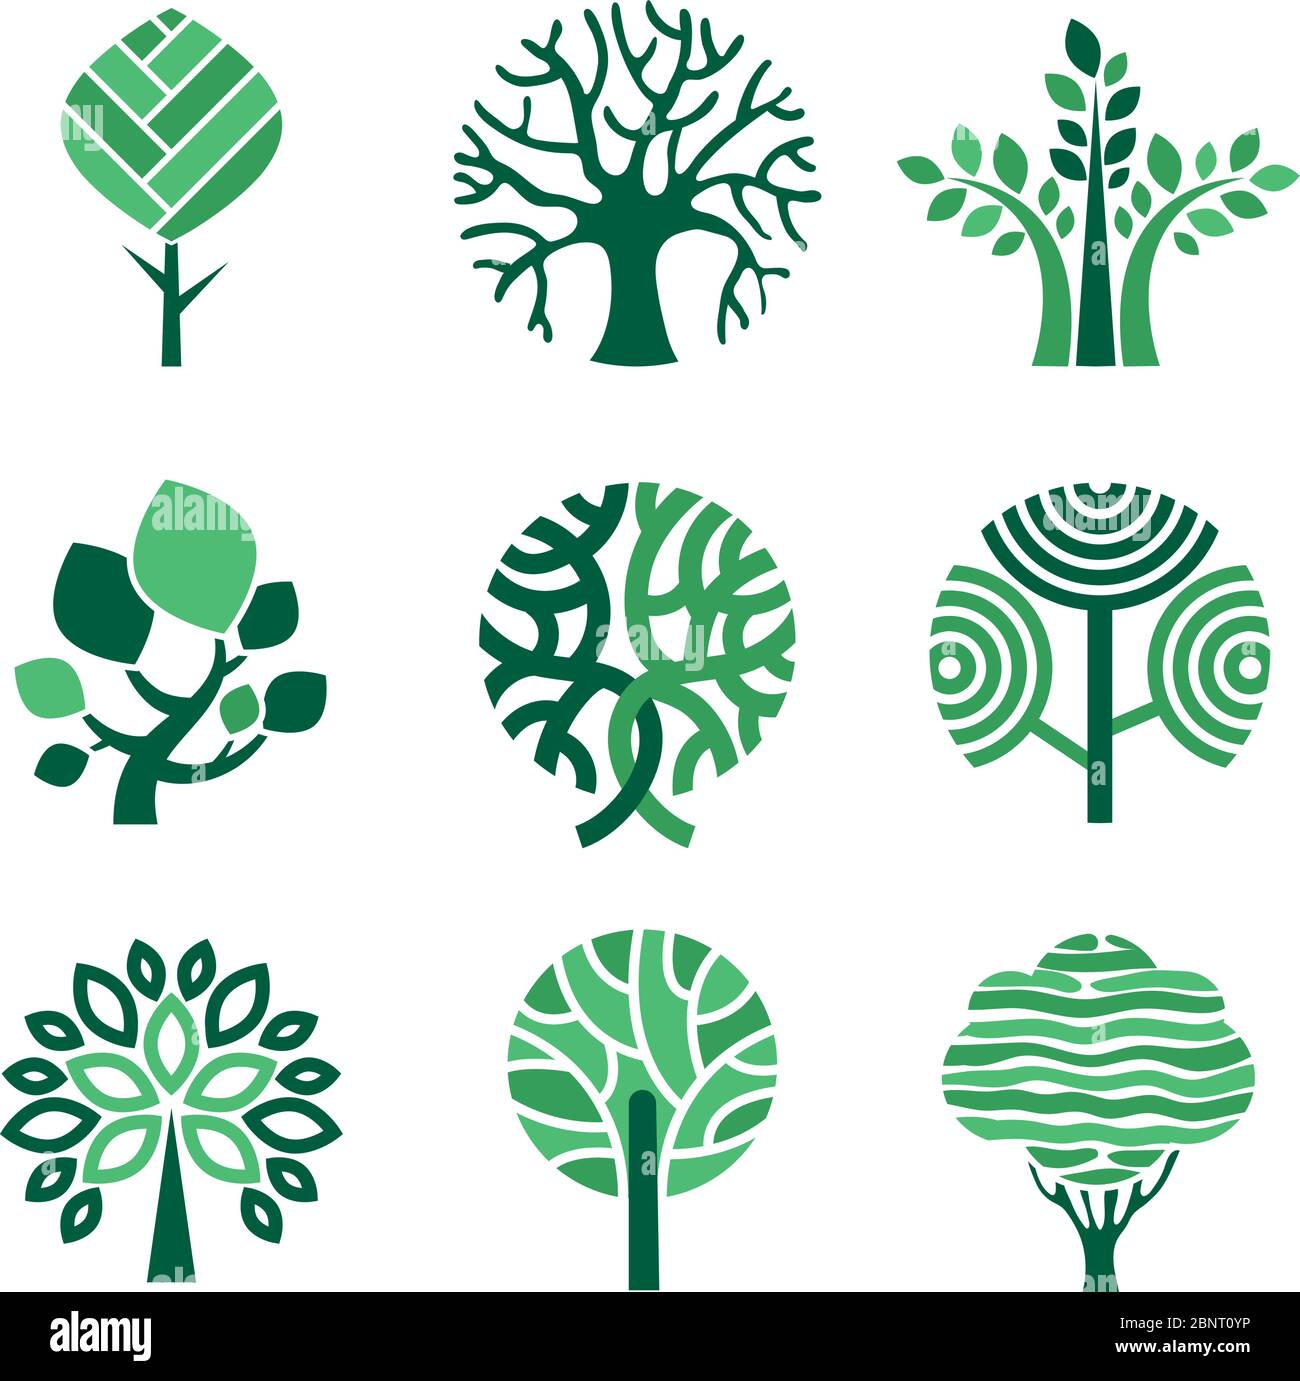 Baumlogo. Grüne Öko-Symbole Natur Holz Baum stilisierte Vektorbilder Stock Vektor